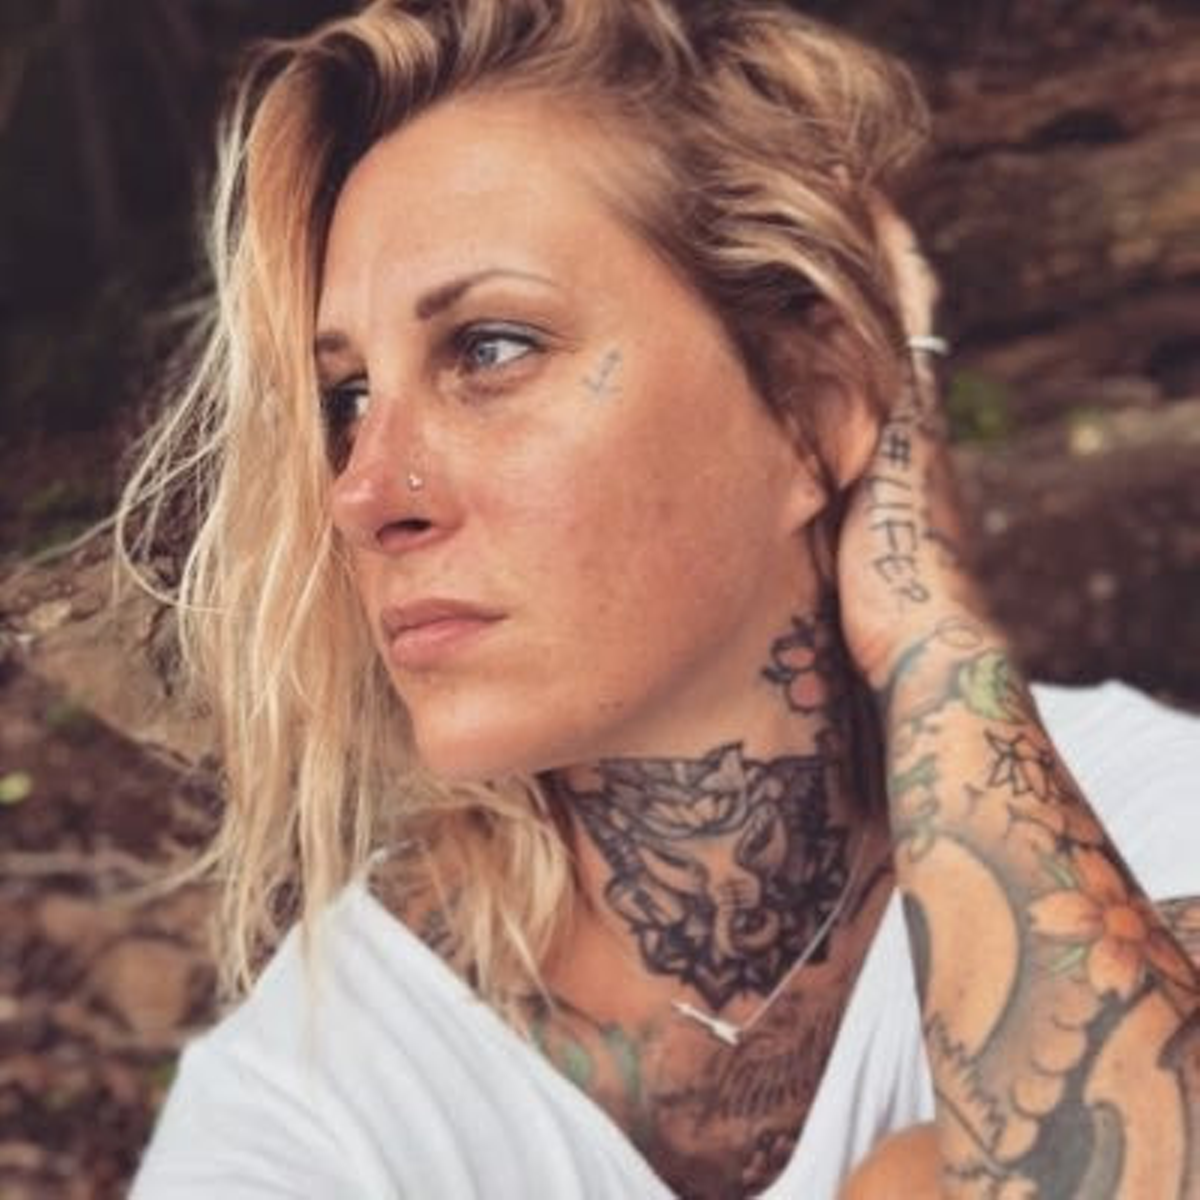 Tattoo Artist, Breast Cancer Activist Beth Fairchild Visits UC Cancer  Institute to Train Staff on 3D Areola Tattoos | Cincinnati CityBeat